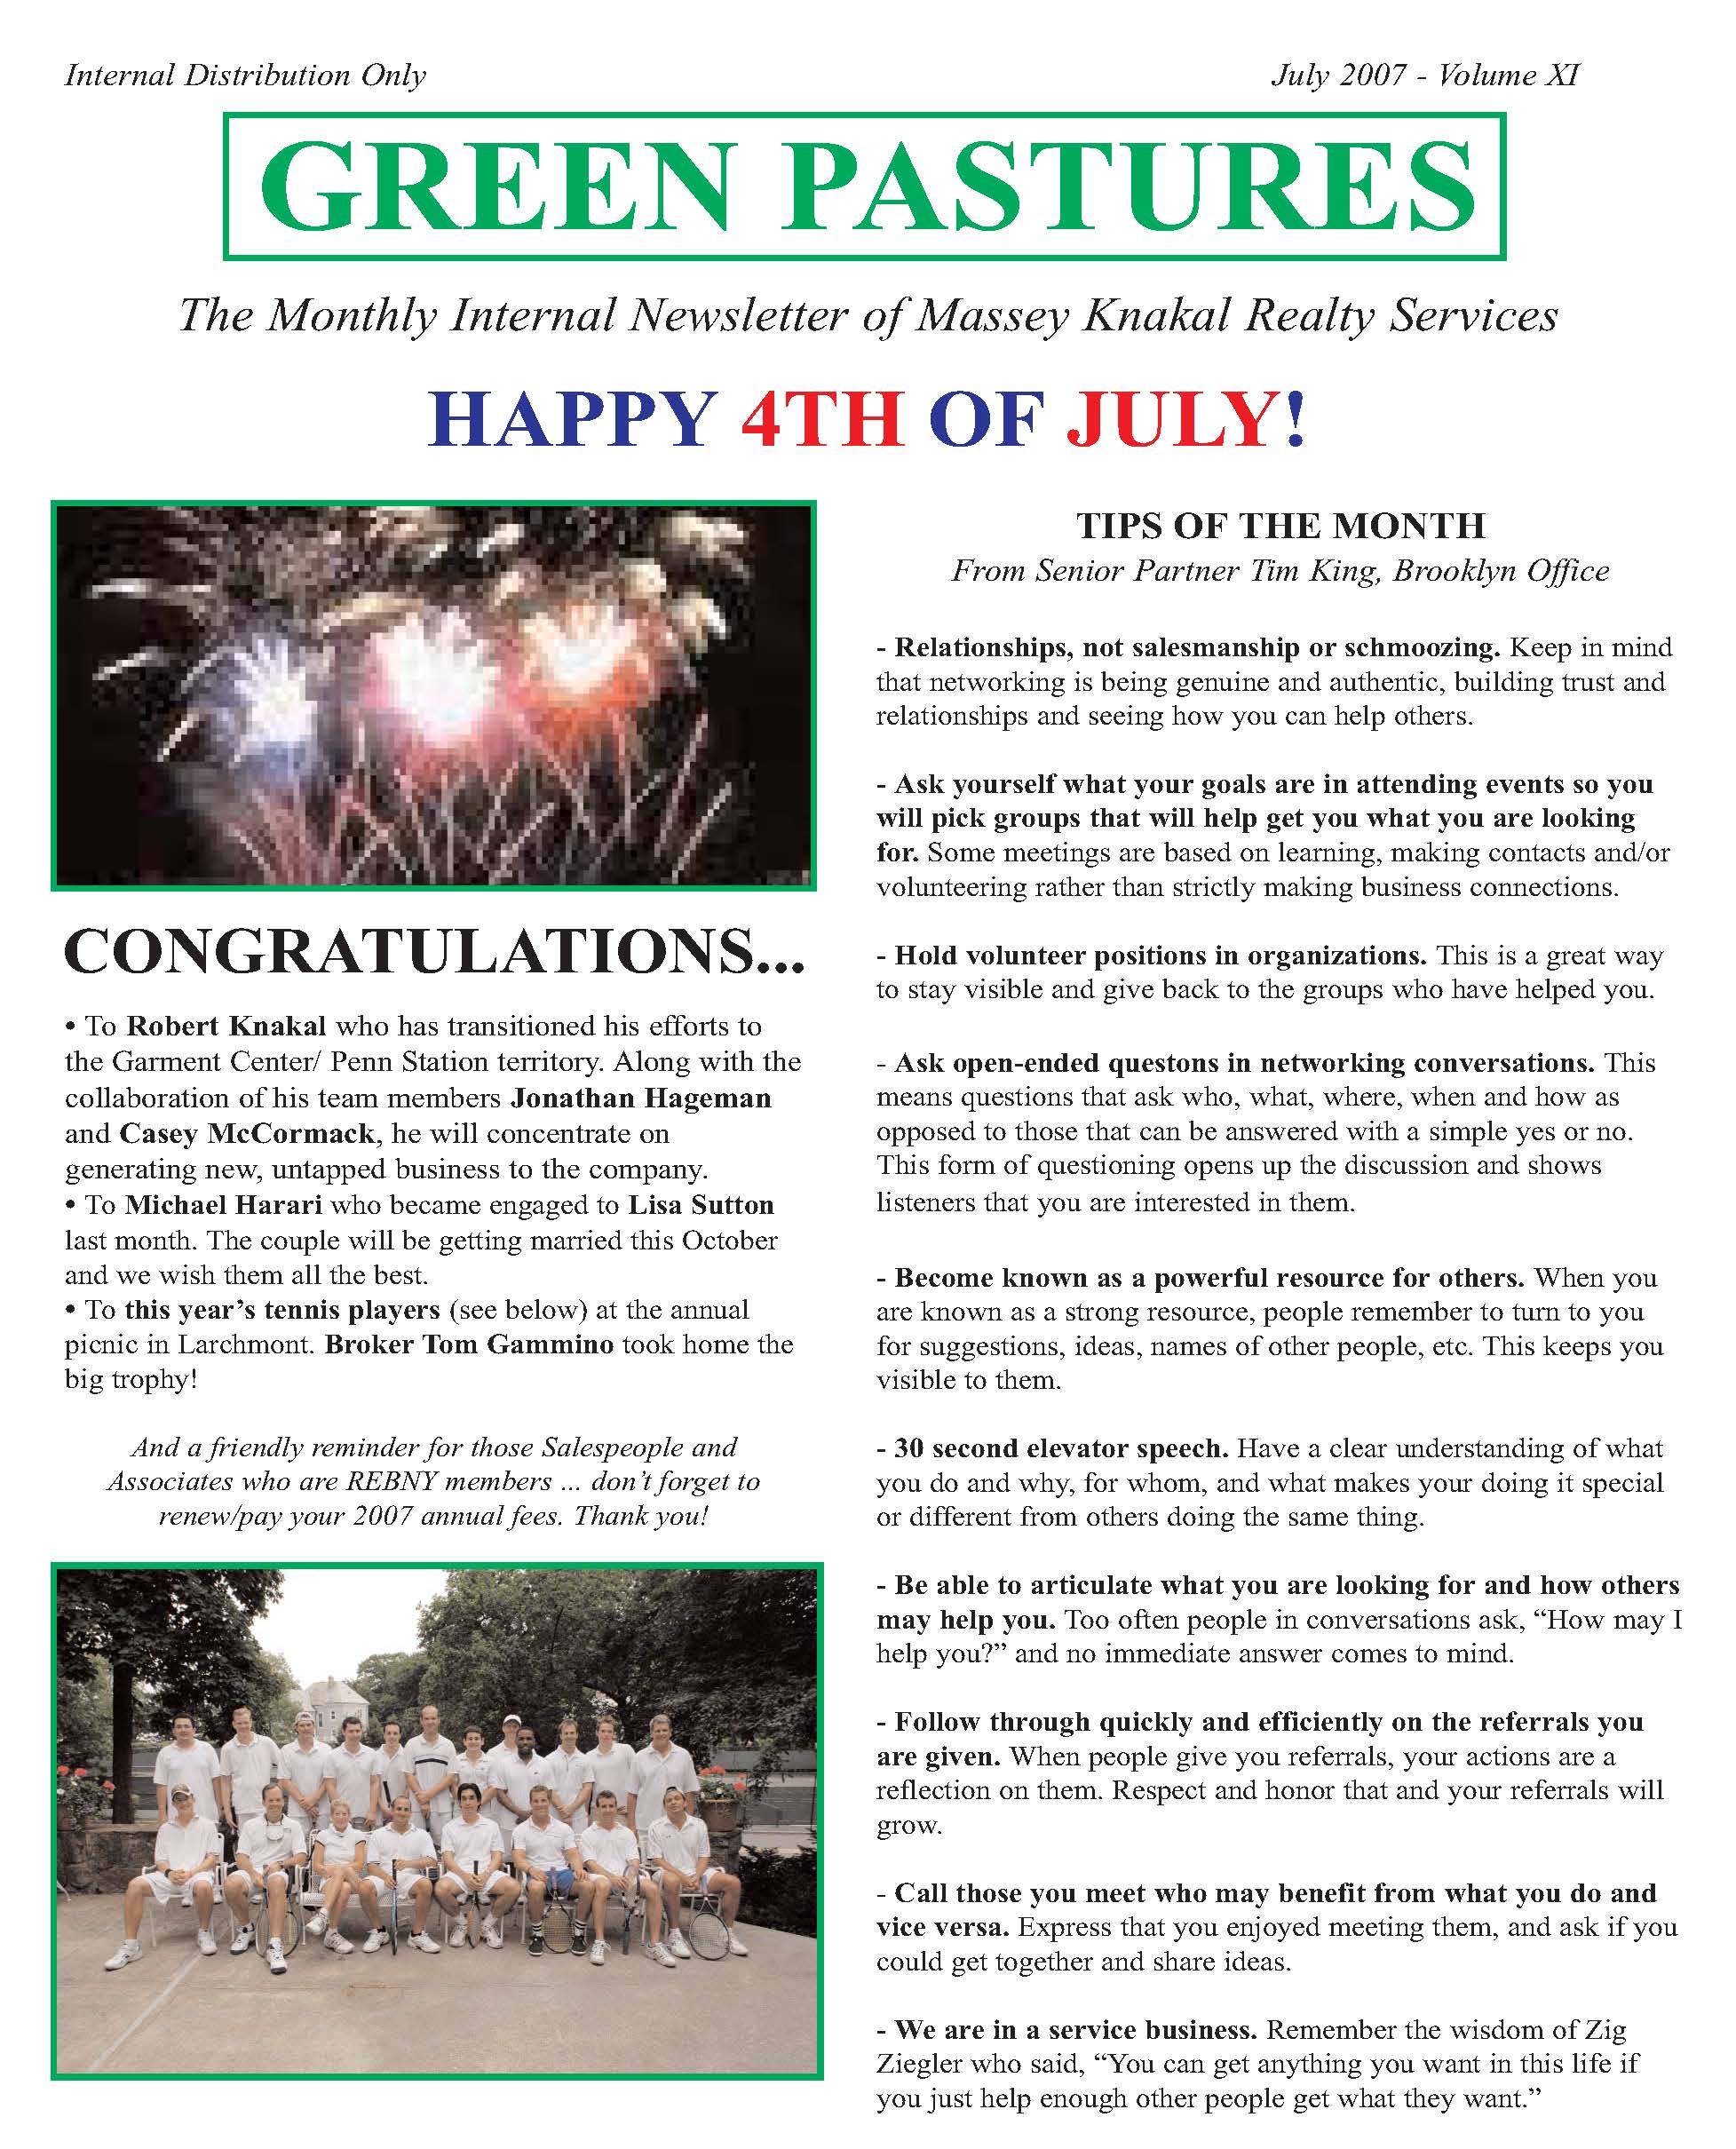 July 2007 Internal Newsletter_Page_1